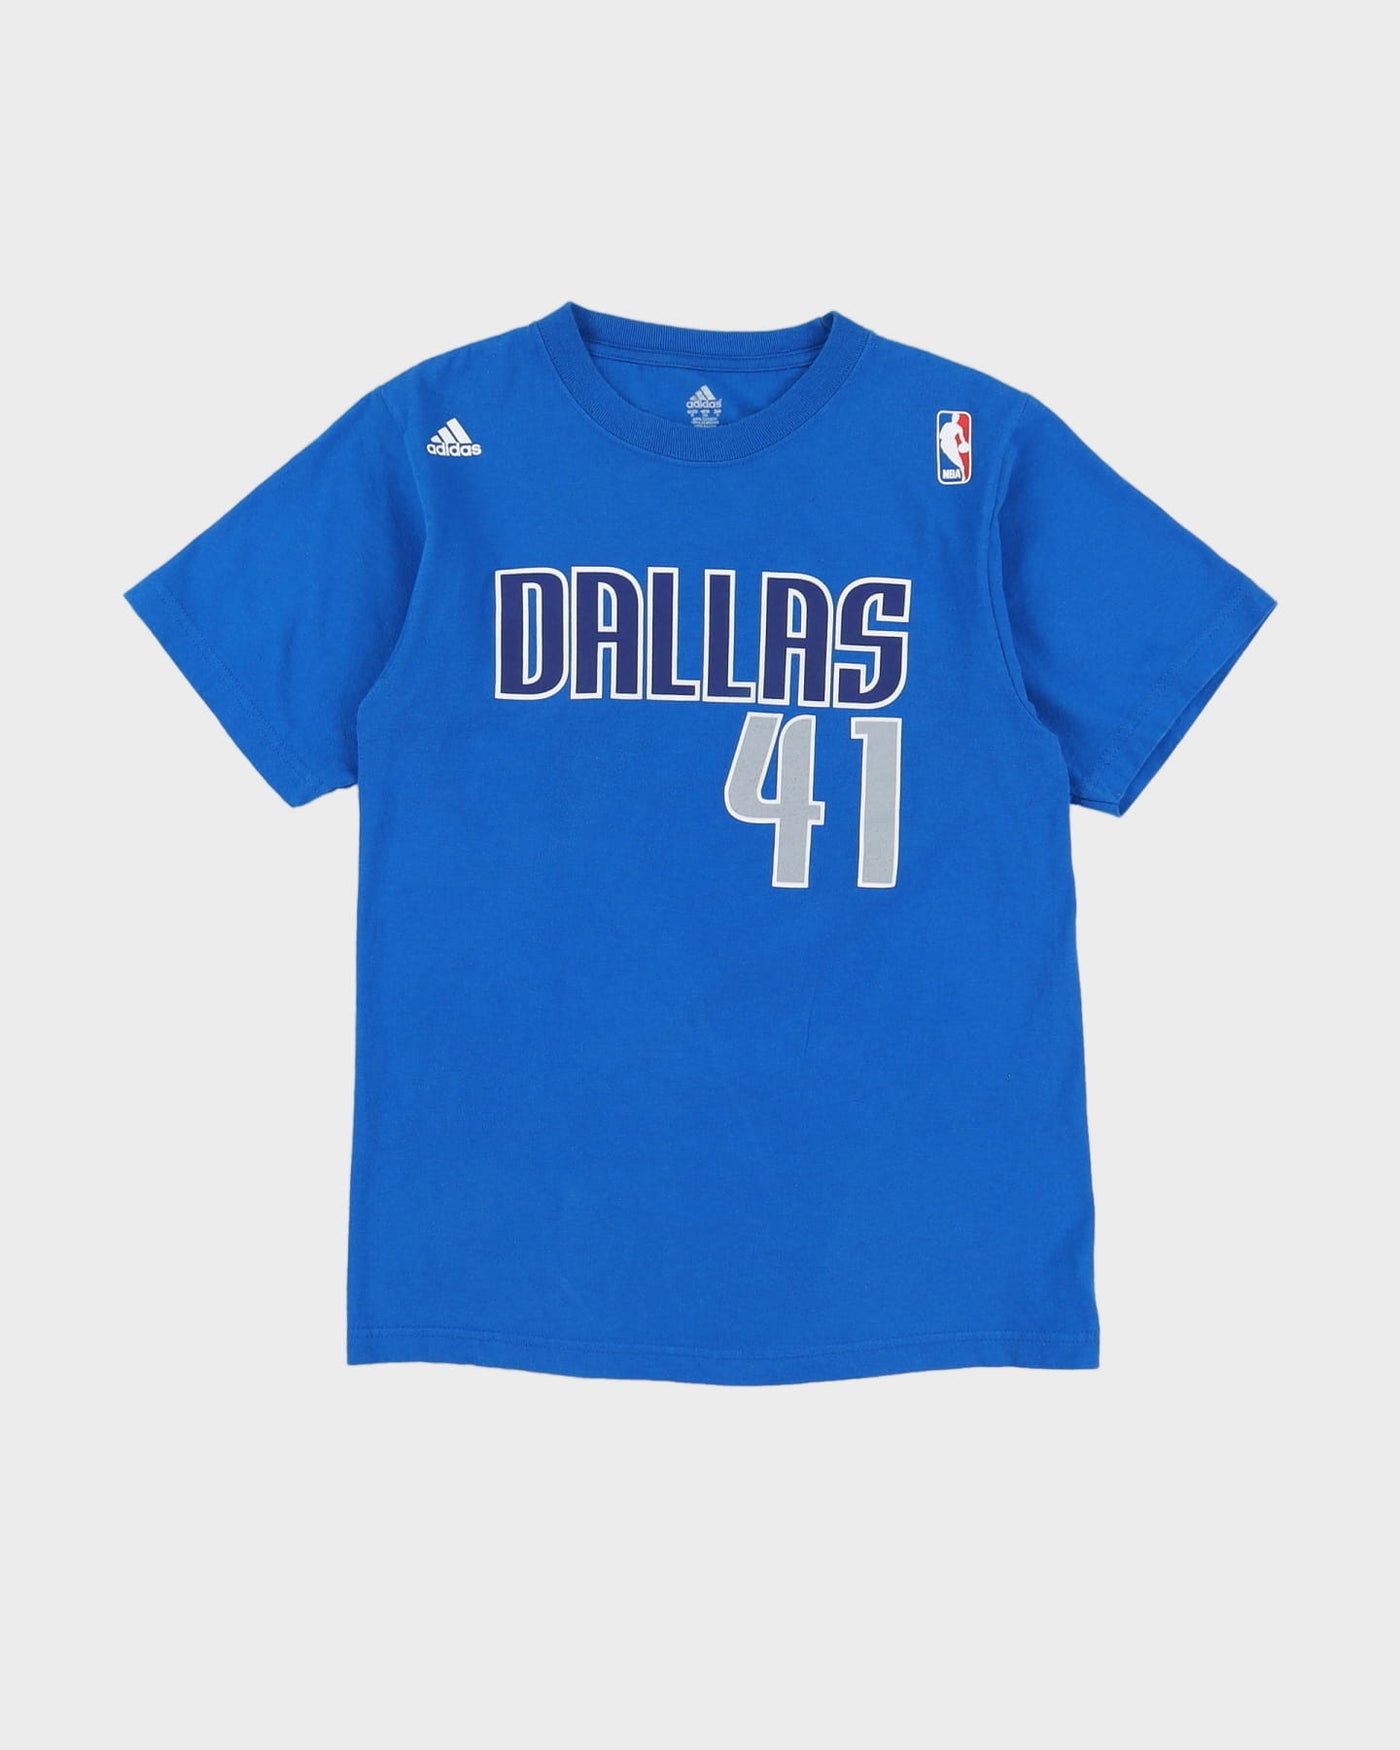 Dirk Nowitzki #41 Dallas Mavericks NBA Blue Adidas Blue Graphic T-Shirt - S